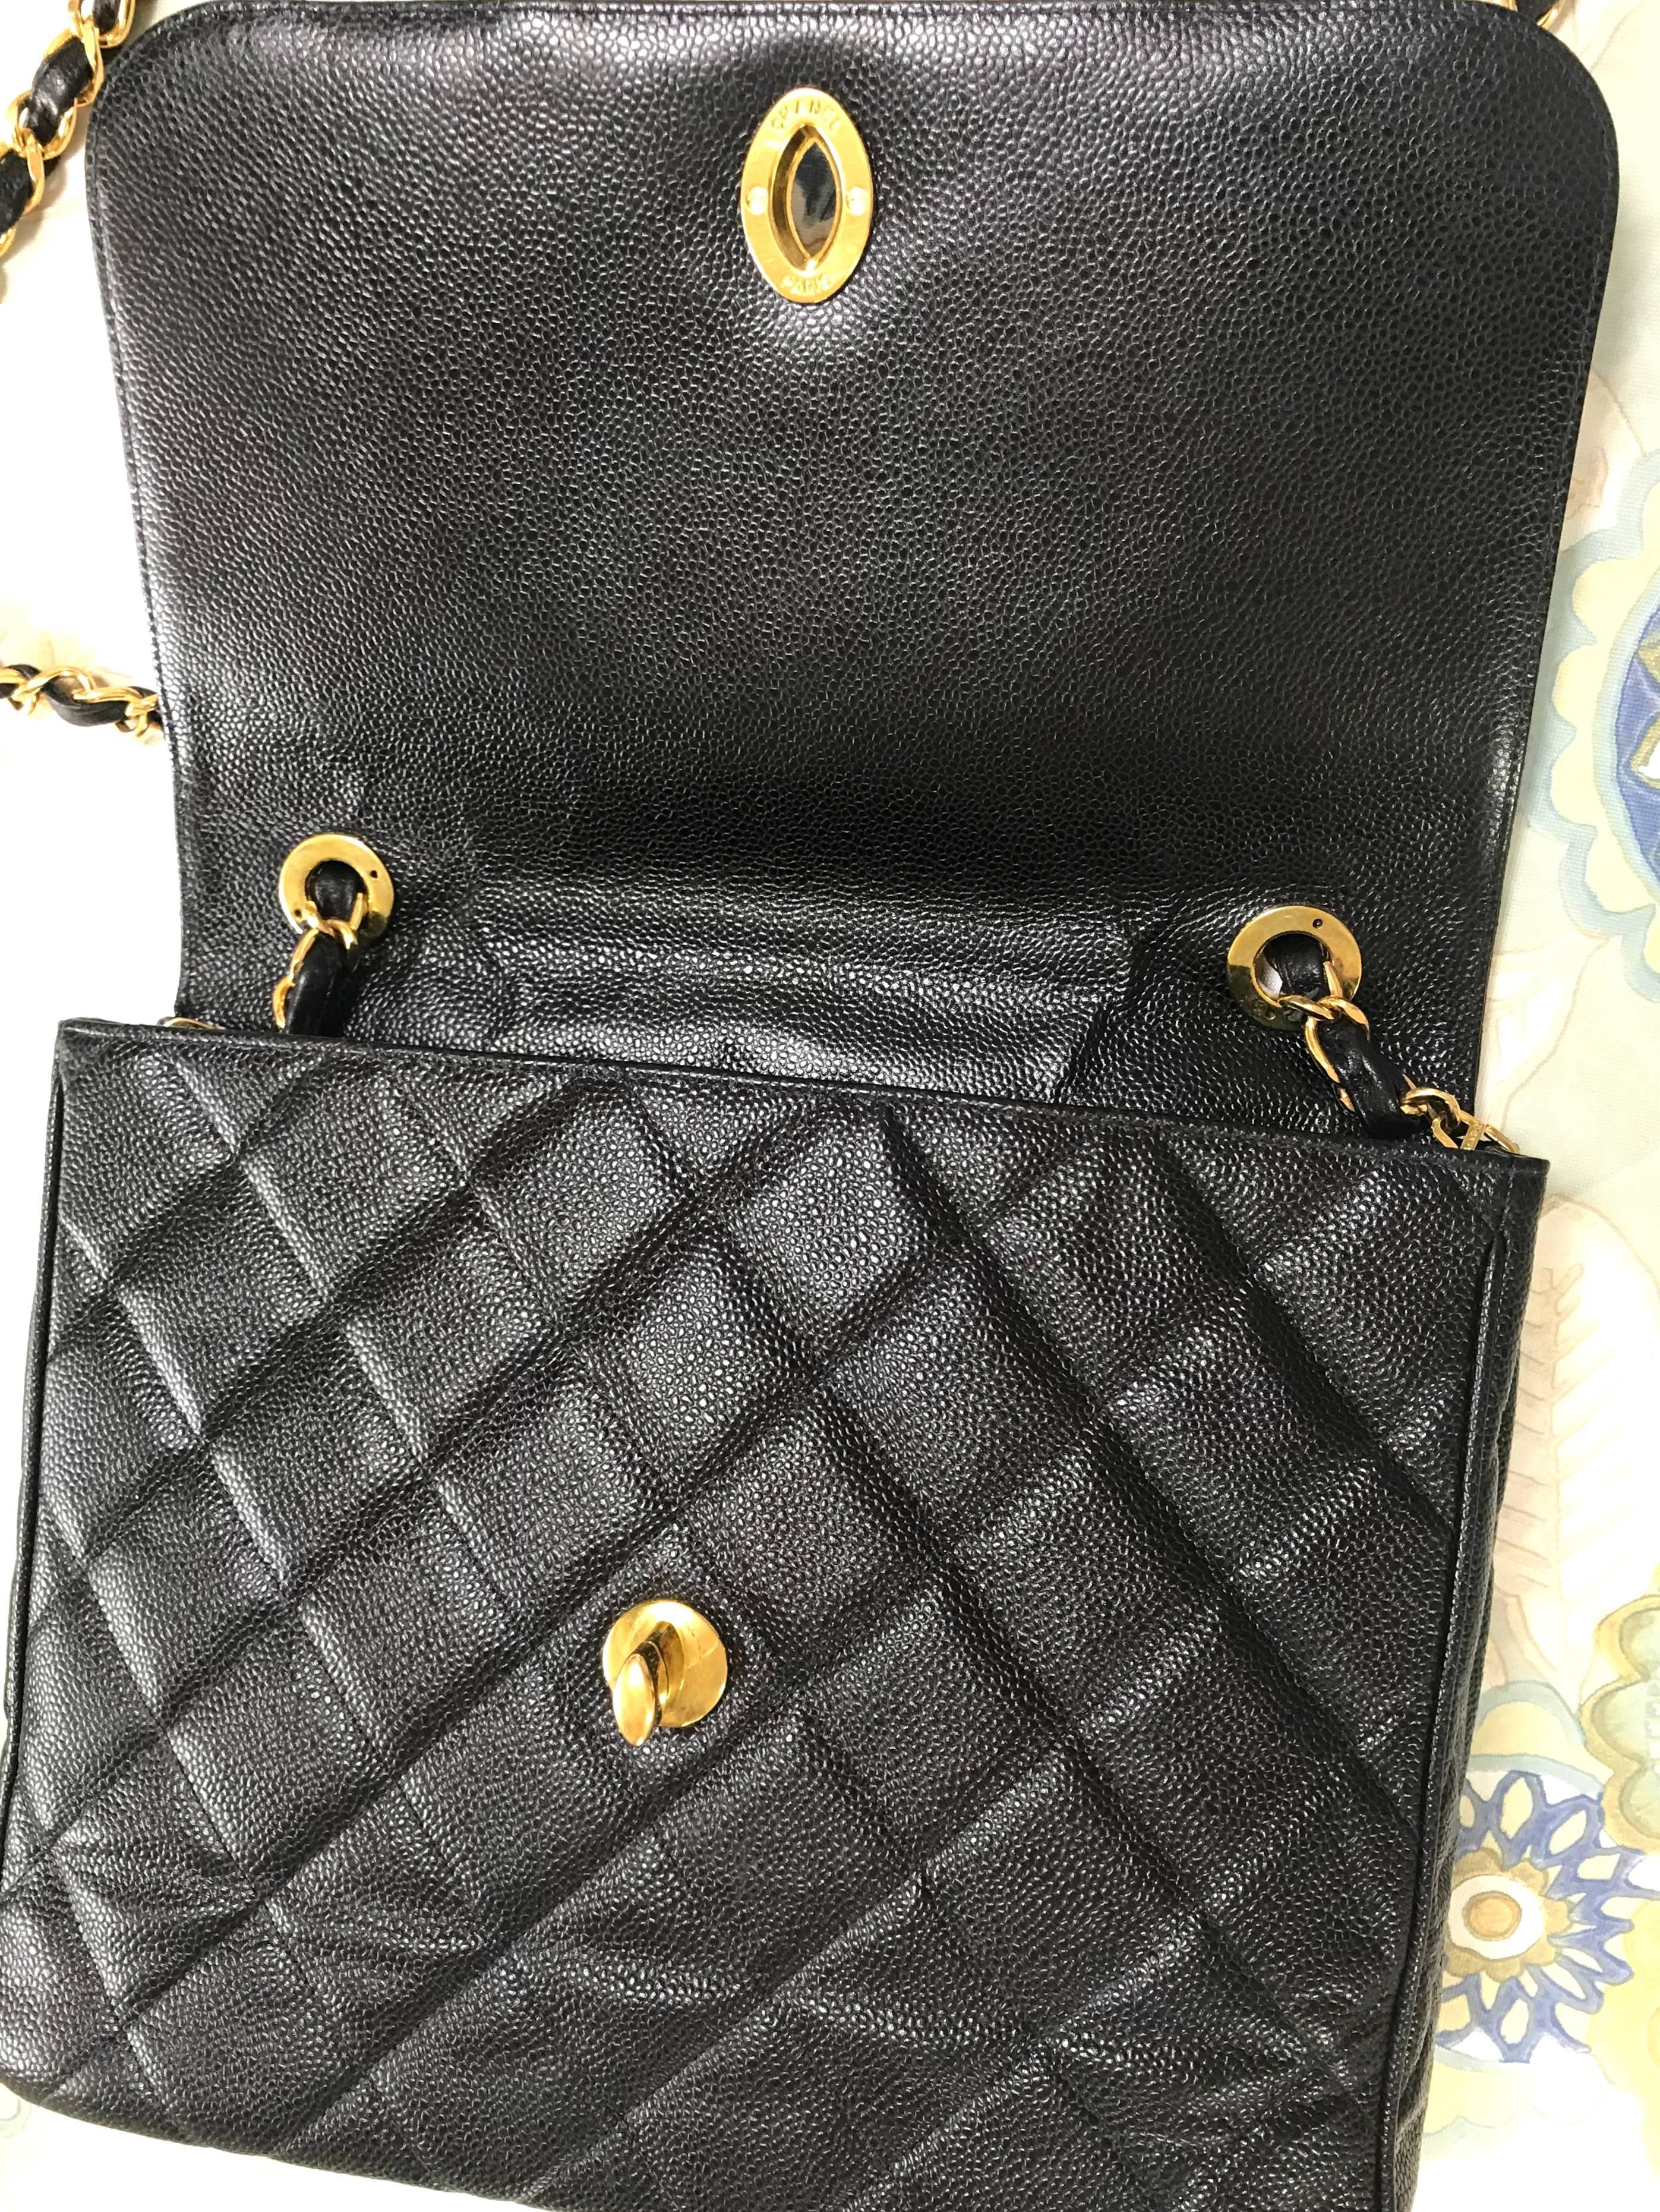 Vintage Chanel classic large black caviar leather 2.55 square chain shoulder bag For Sale 9